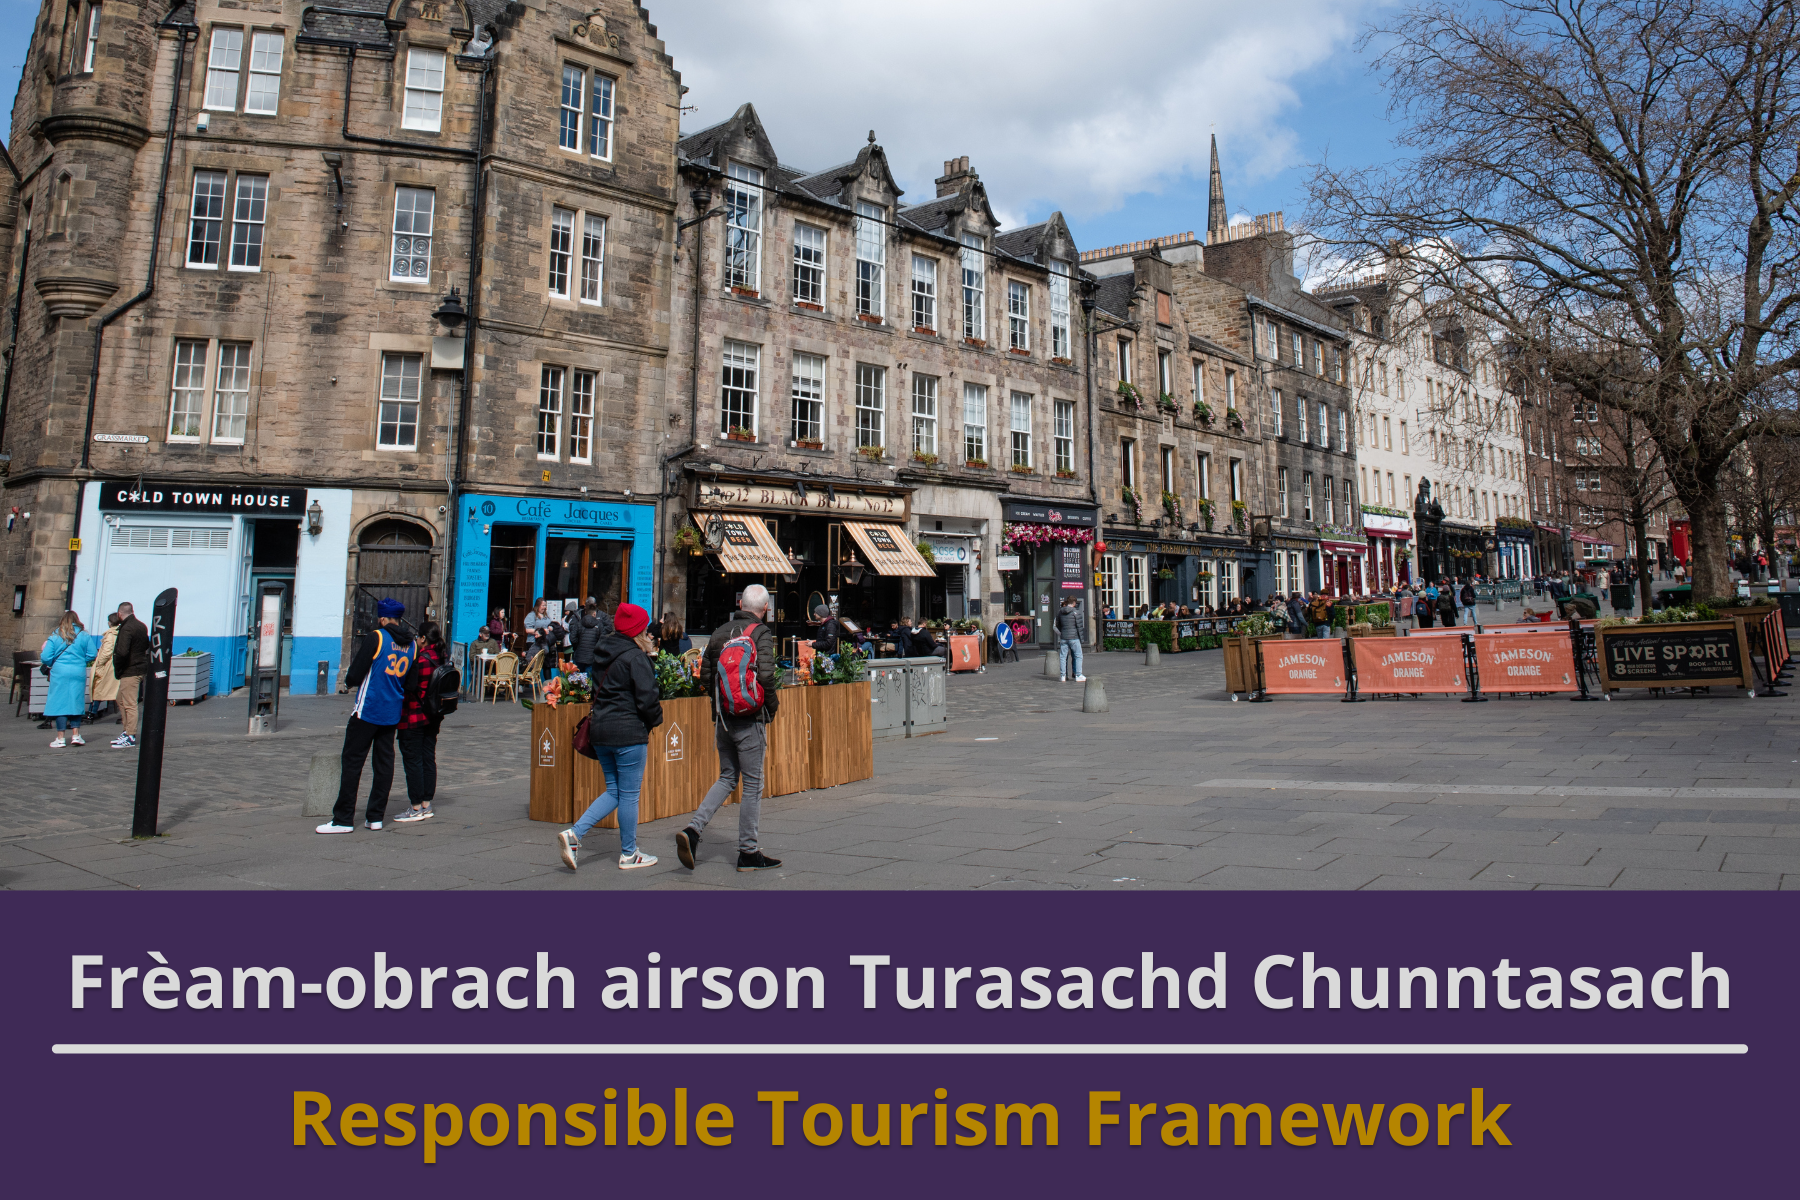 Historical Environment Scotland: Responsible Tourism Framework